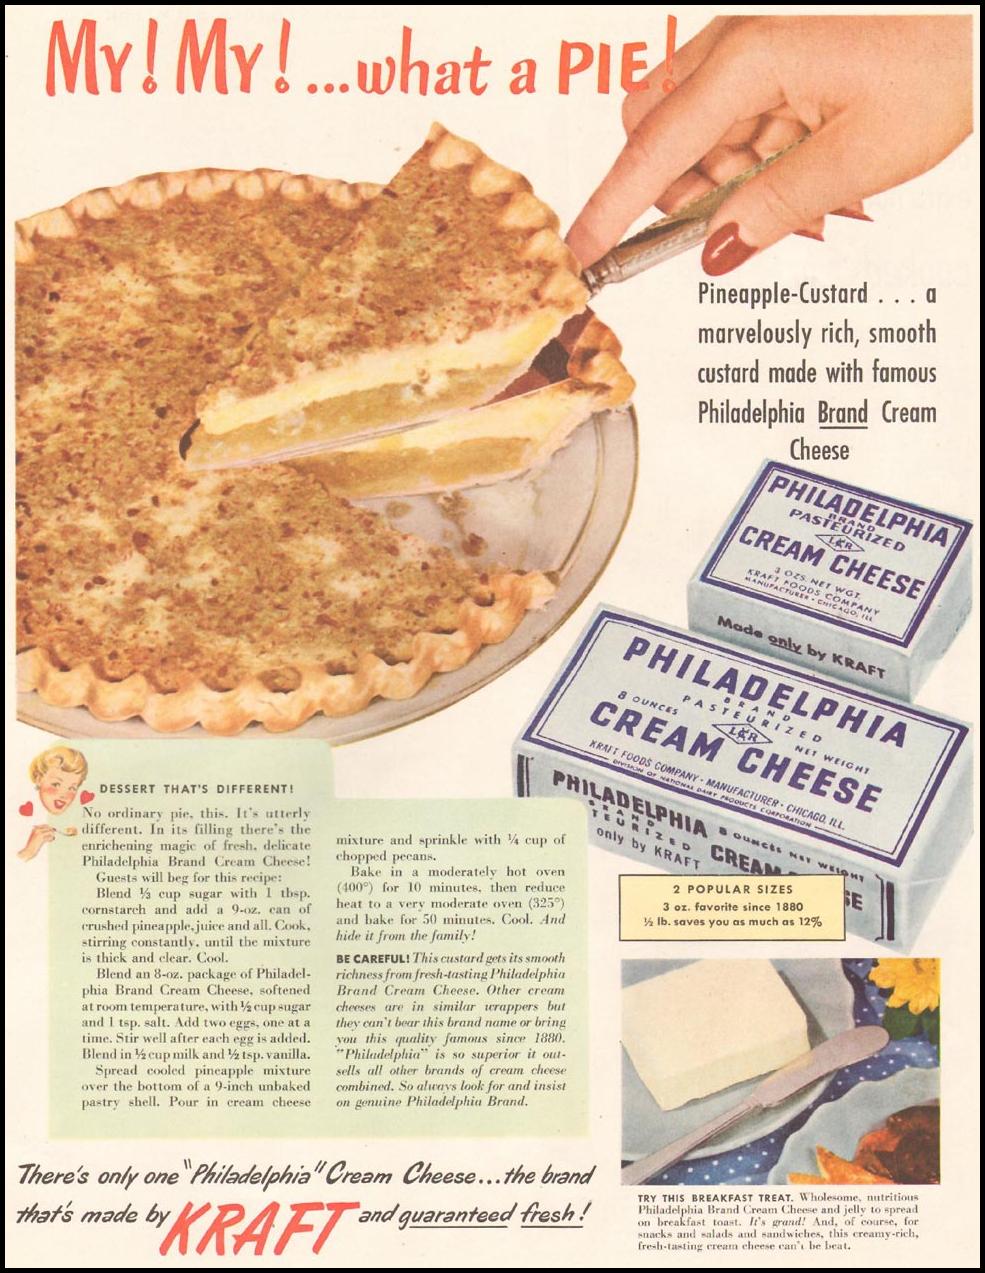 KRAFT PHILADELPHIA CREAM CHEESE
LADIES' HOME JOURNAL
11/01/1950
p. 222